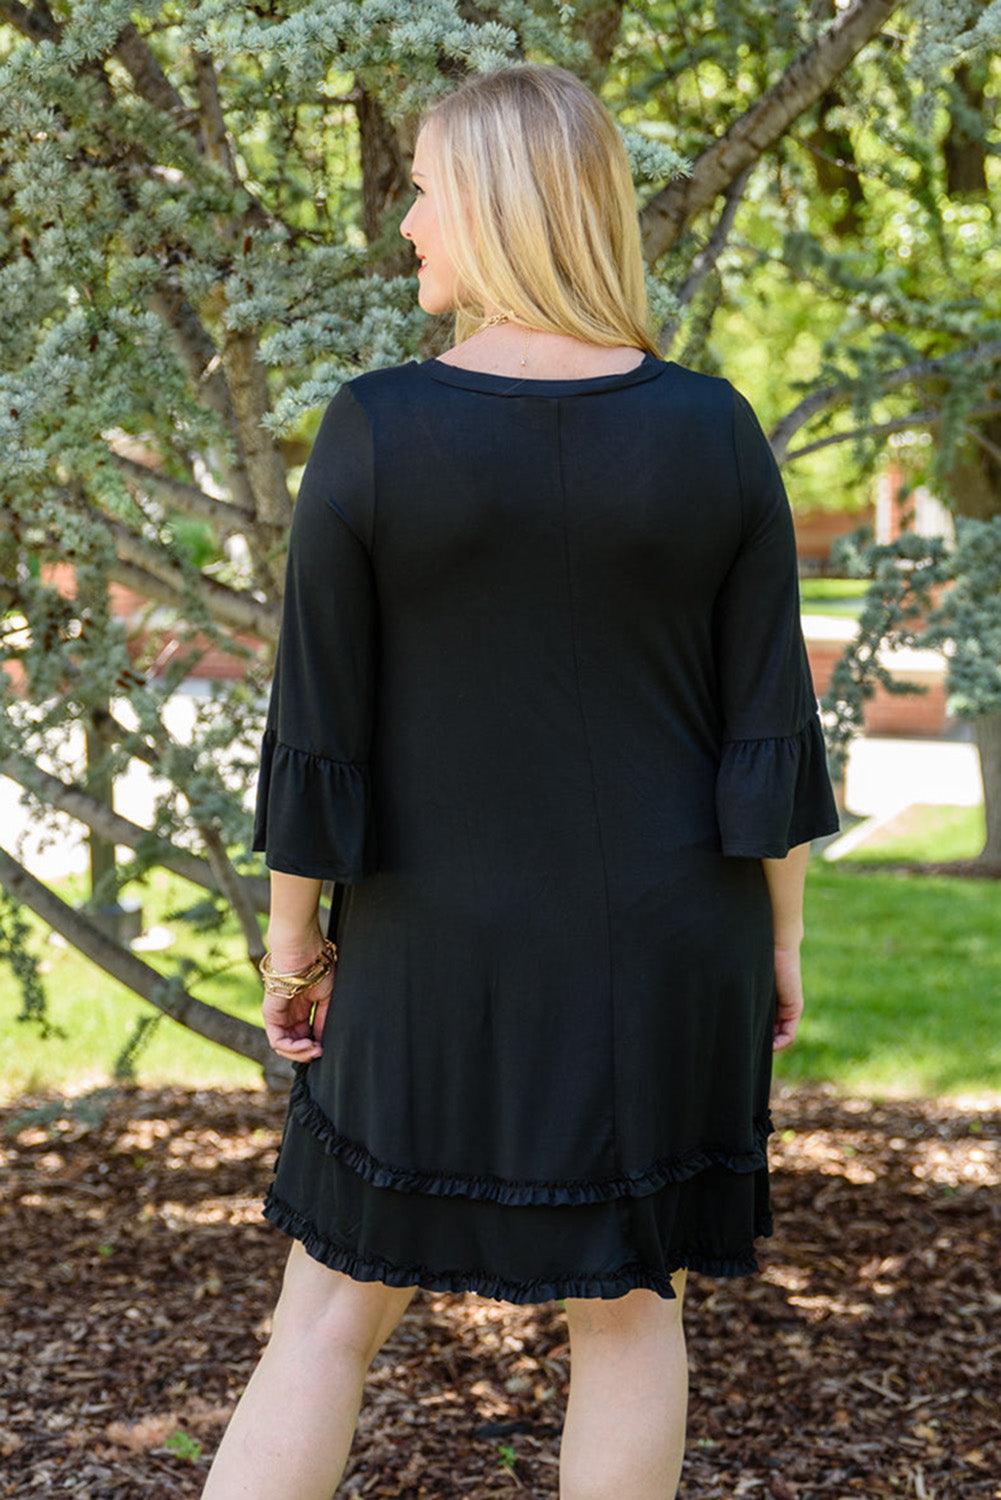 Black Plus Size Ruffled Trim 3/4 Sleeve Dress - SELFTRITSS